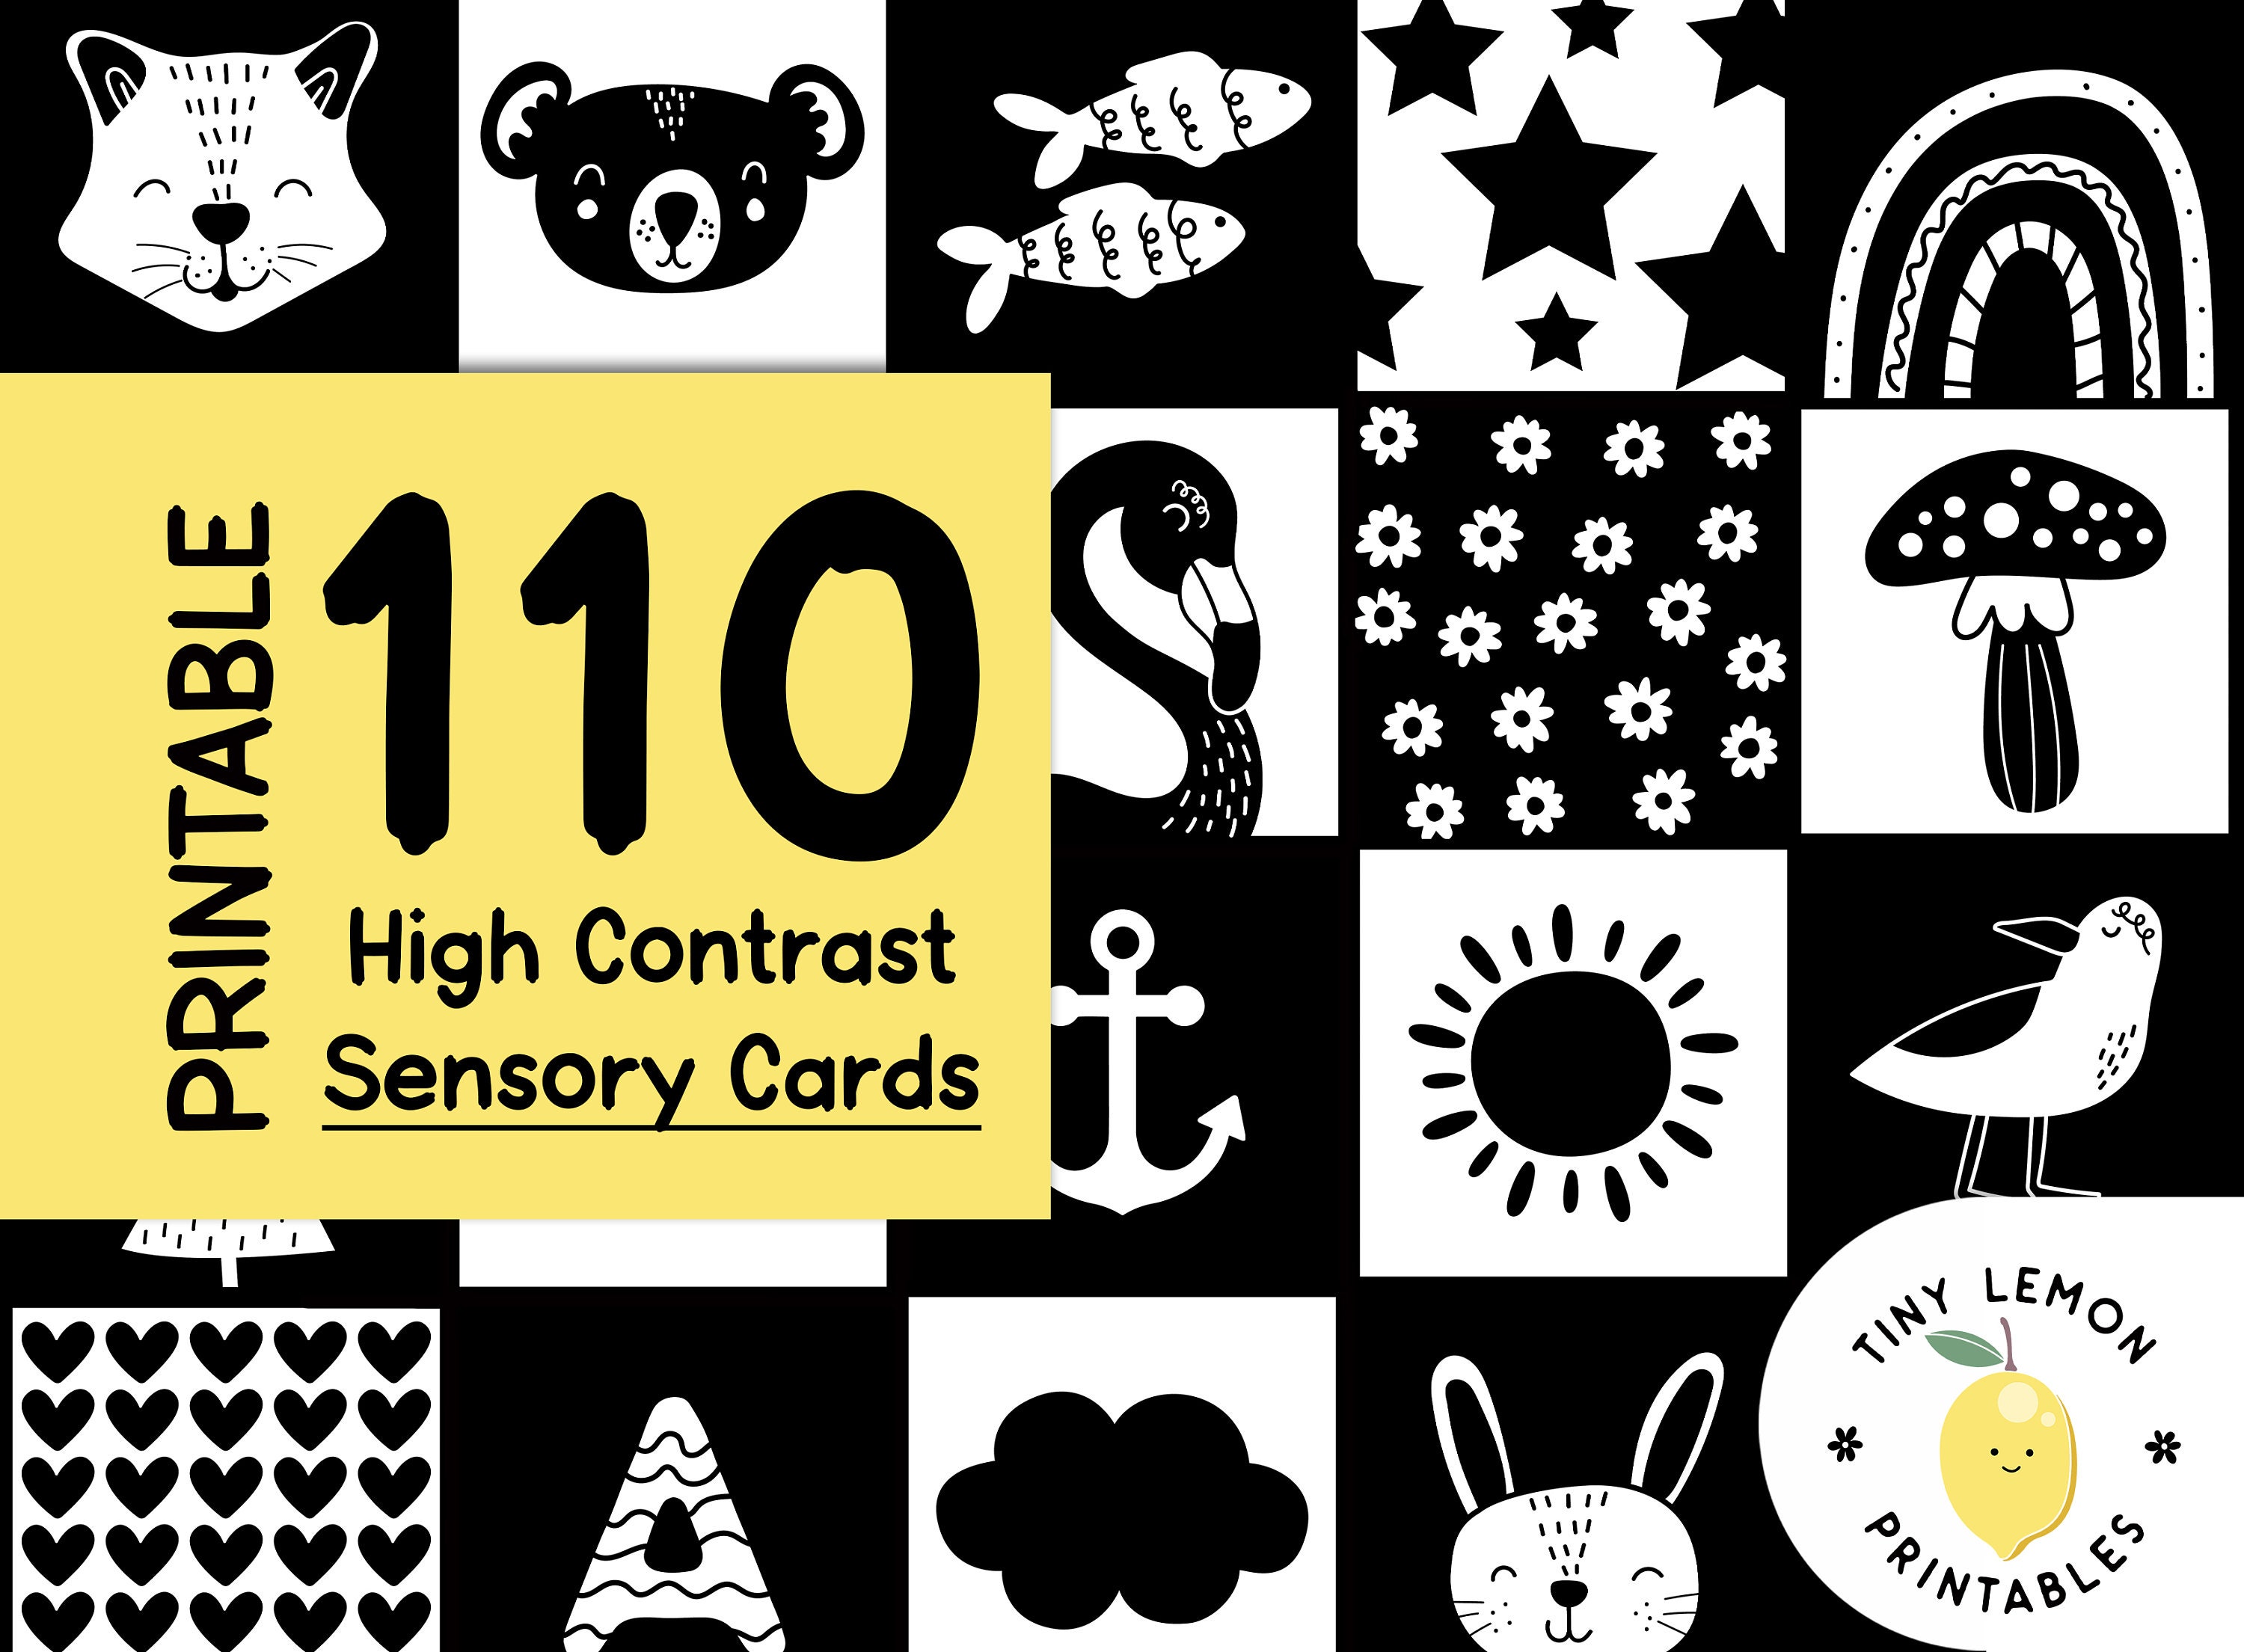 pictogramme-montessori-noir-blanc-carte  Diy baby stuff, Baby flash cards,  Montessori baby toys